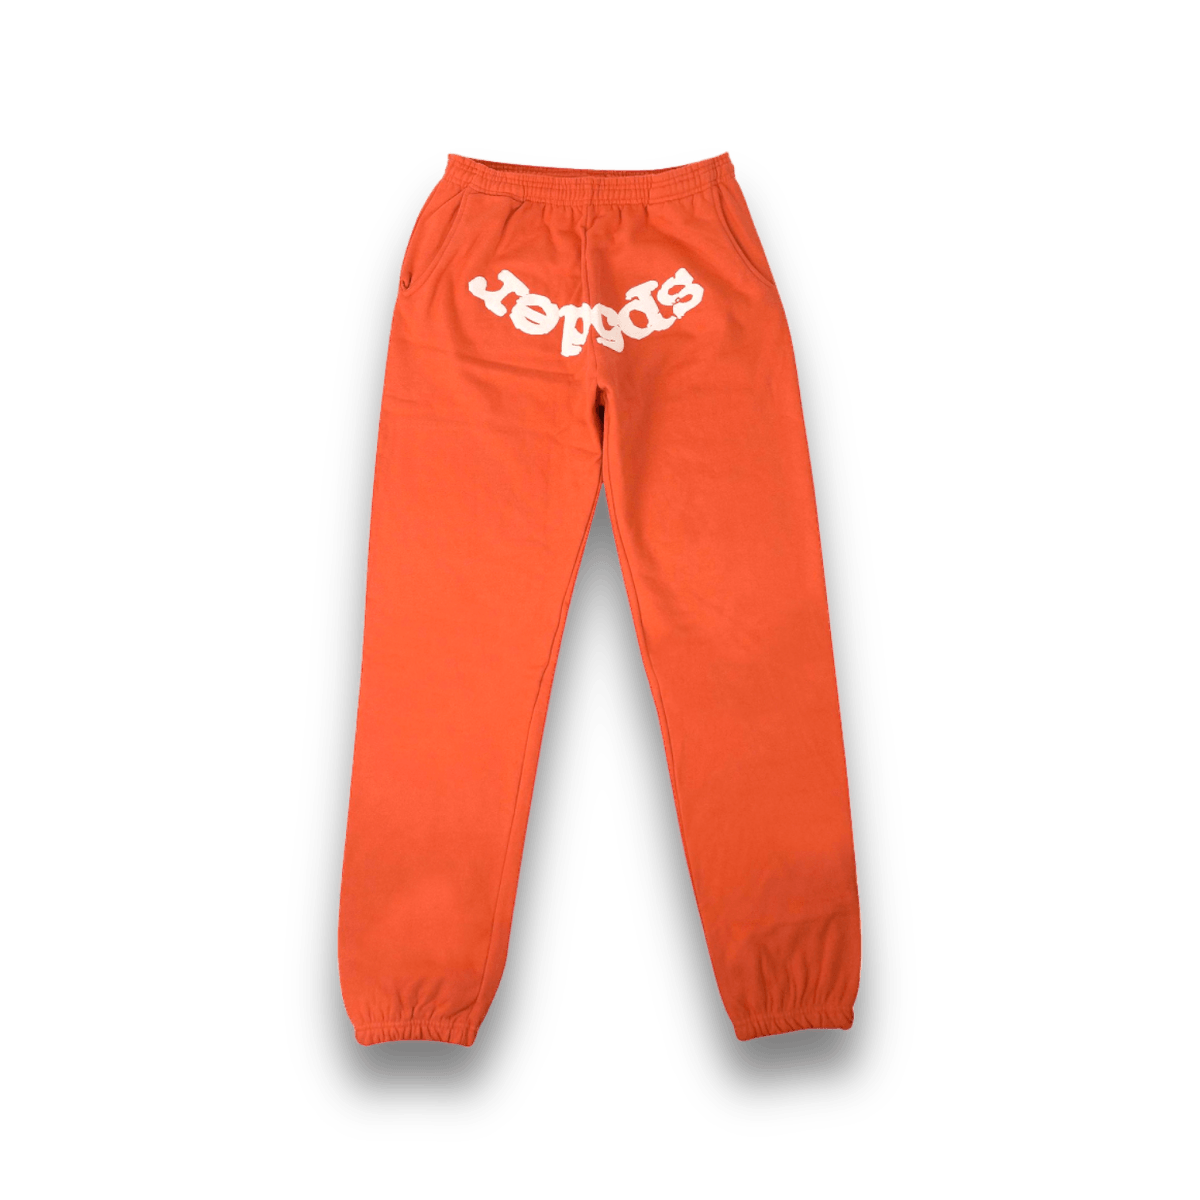 Sp5der OG Rhinestone Sweat Pants 'Orange' - Hoodie - Spider - Jawns on Fire